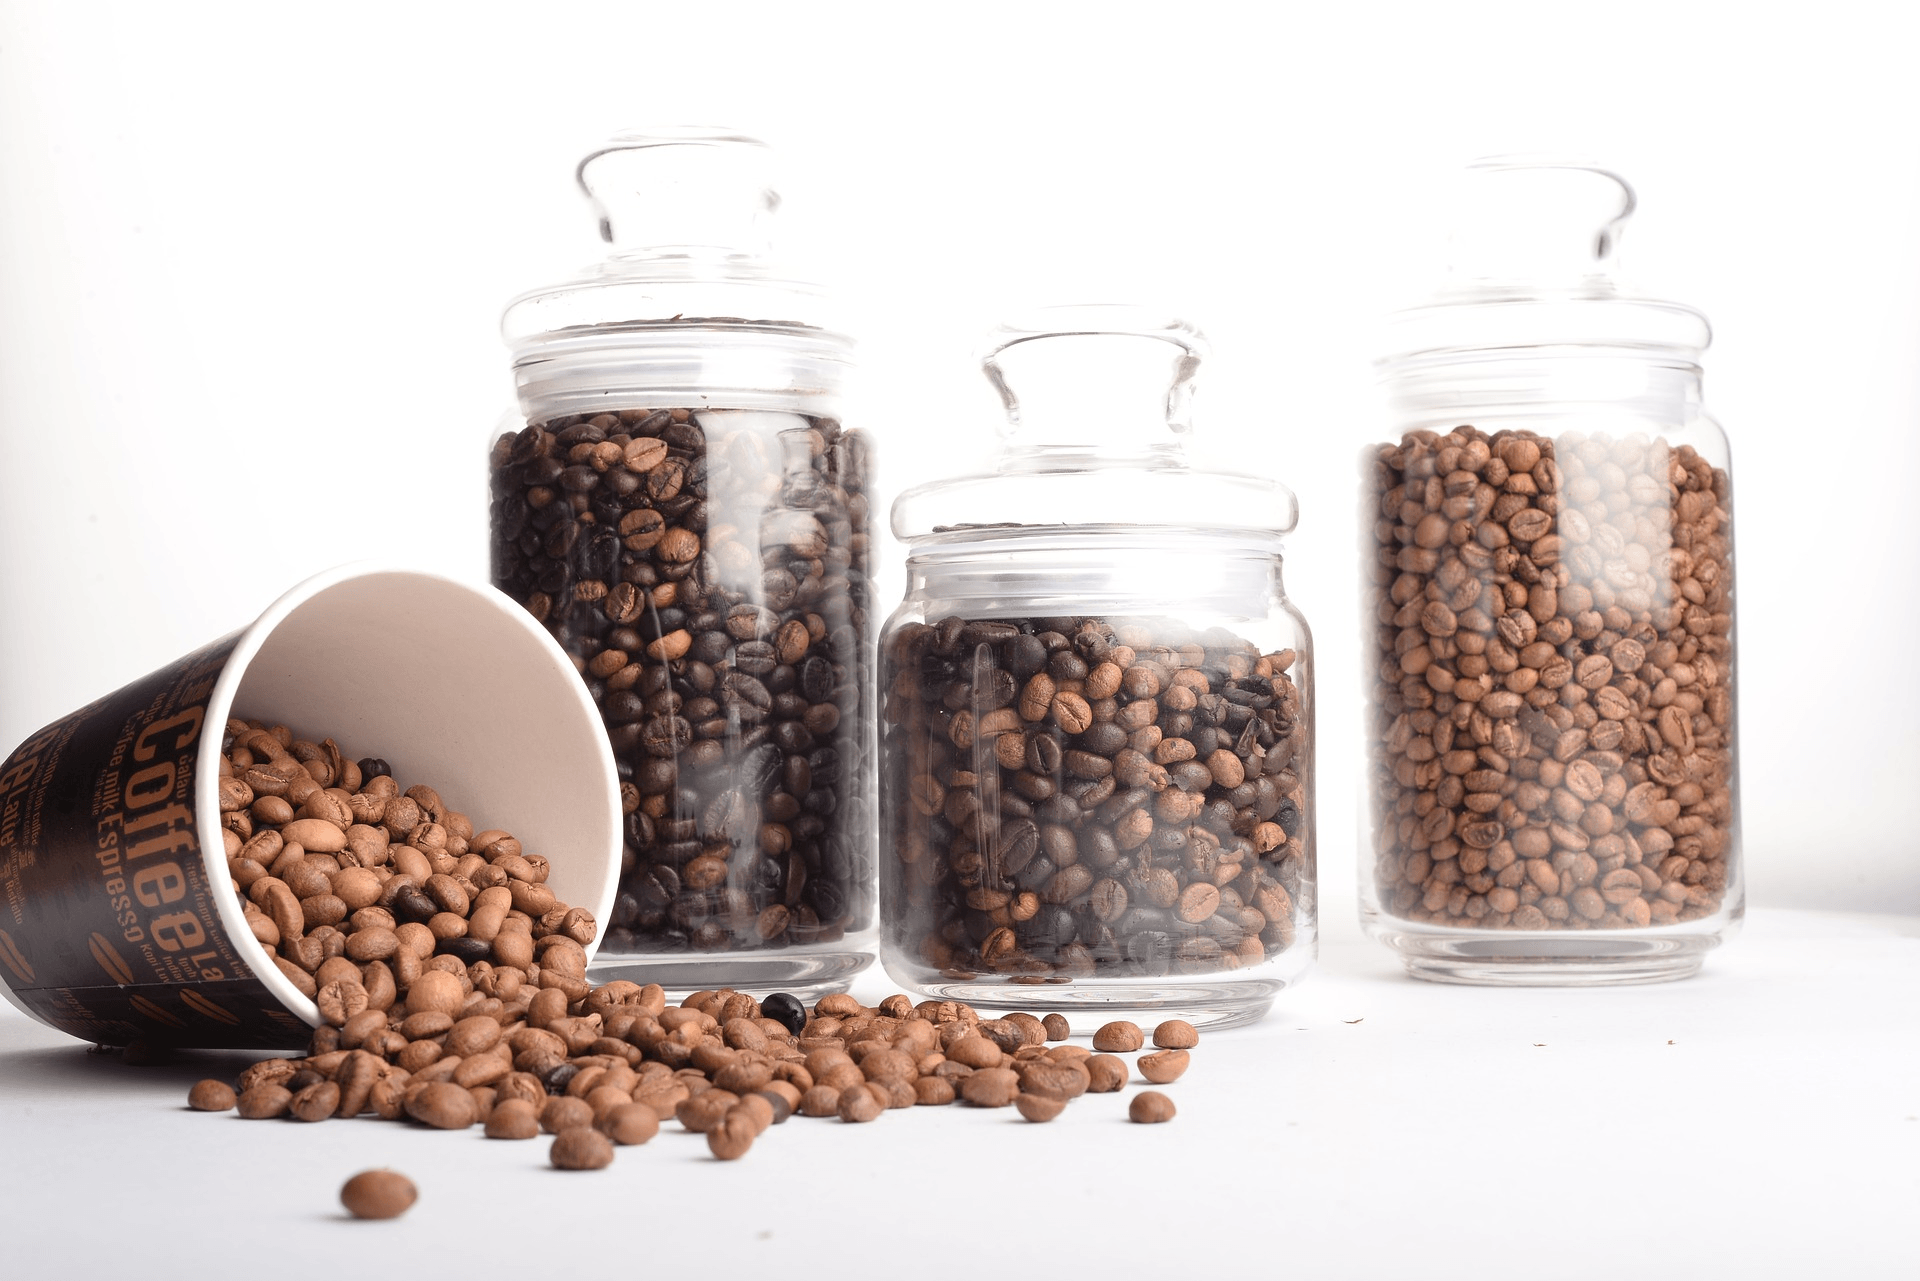 Light Roast vs. Dark Roast Coffee: Nutrition and Caffeine